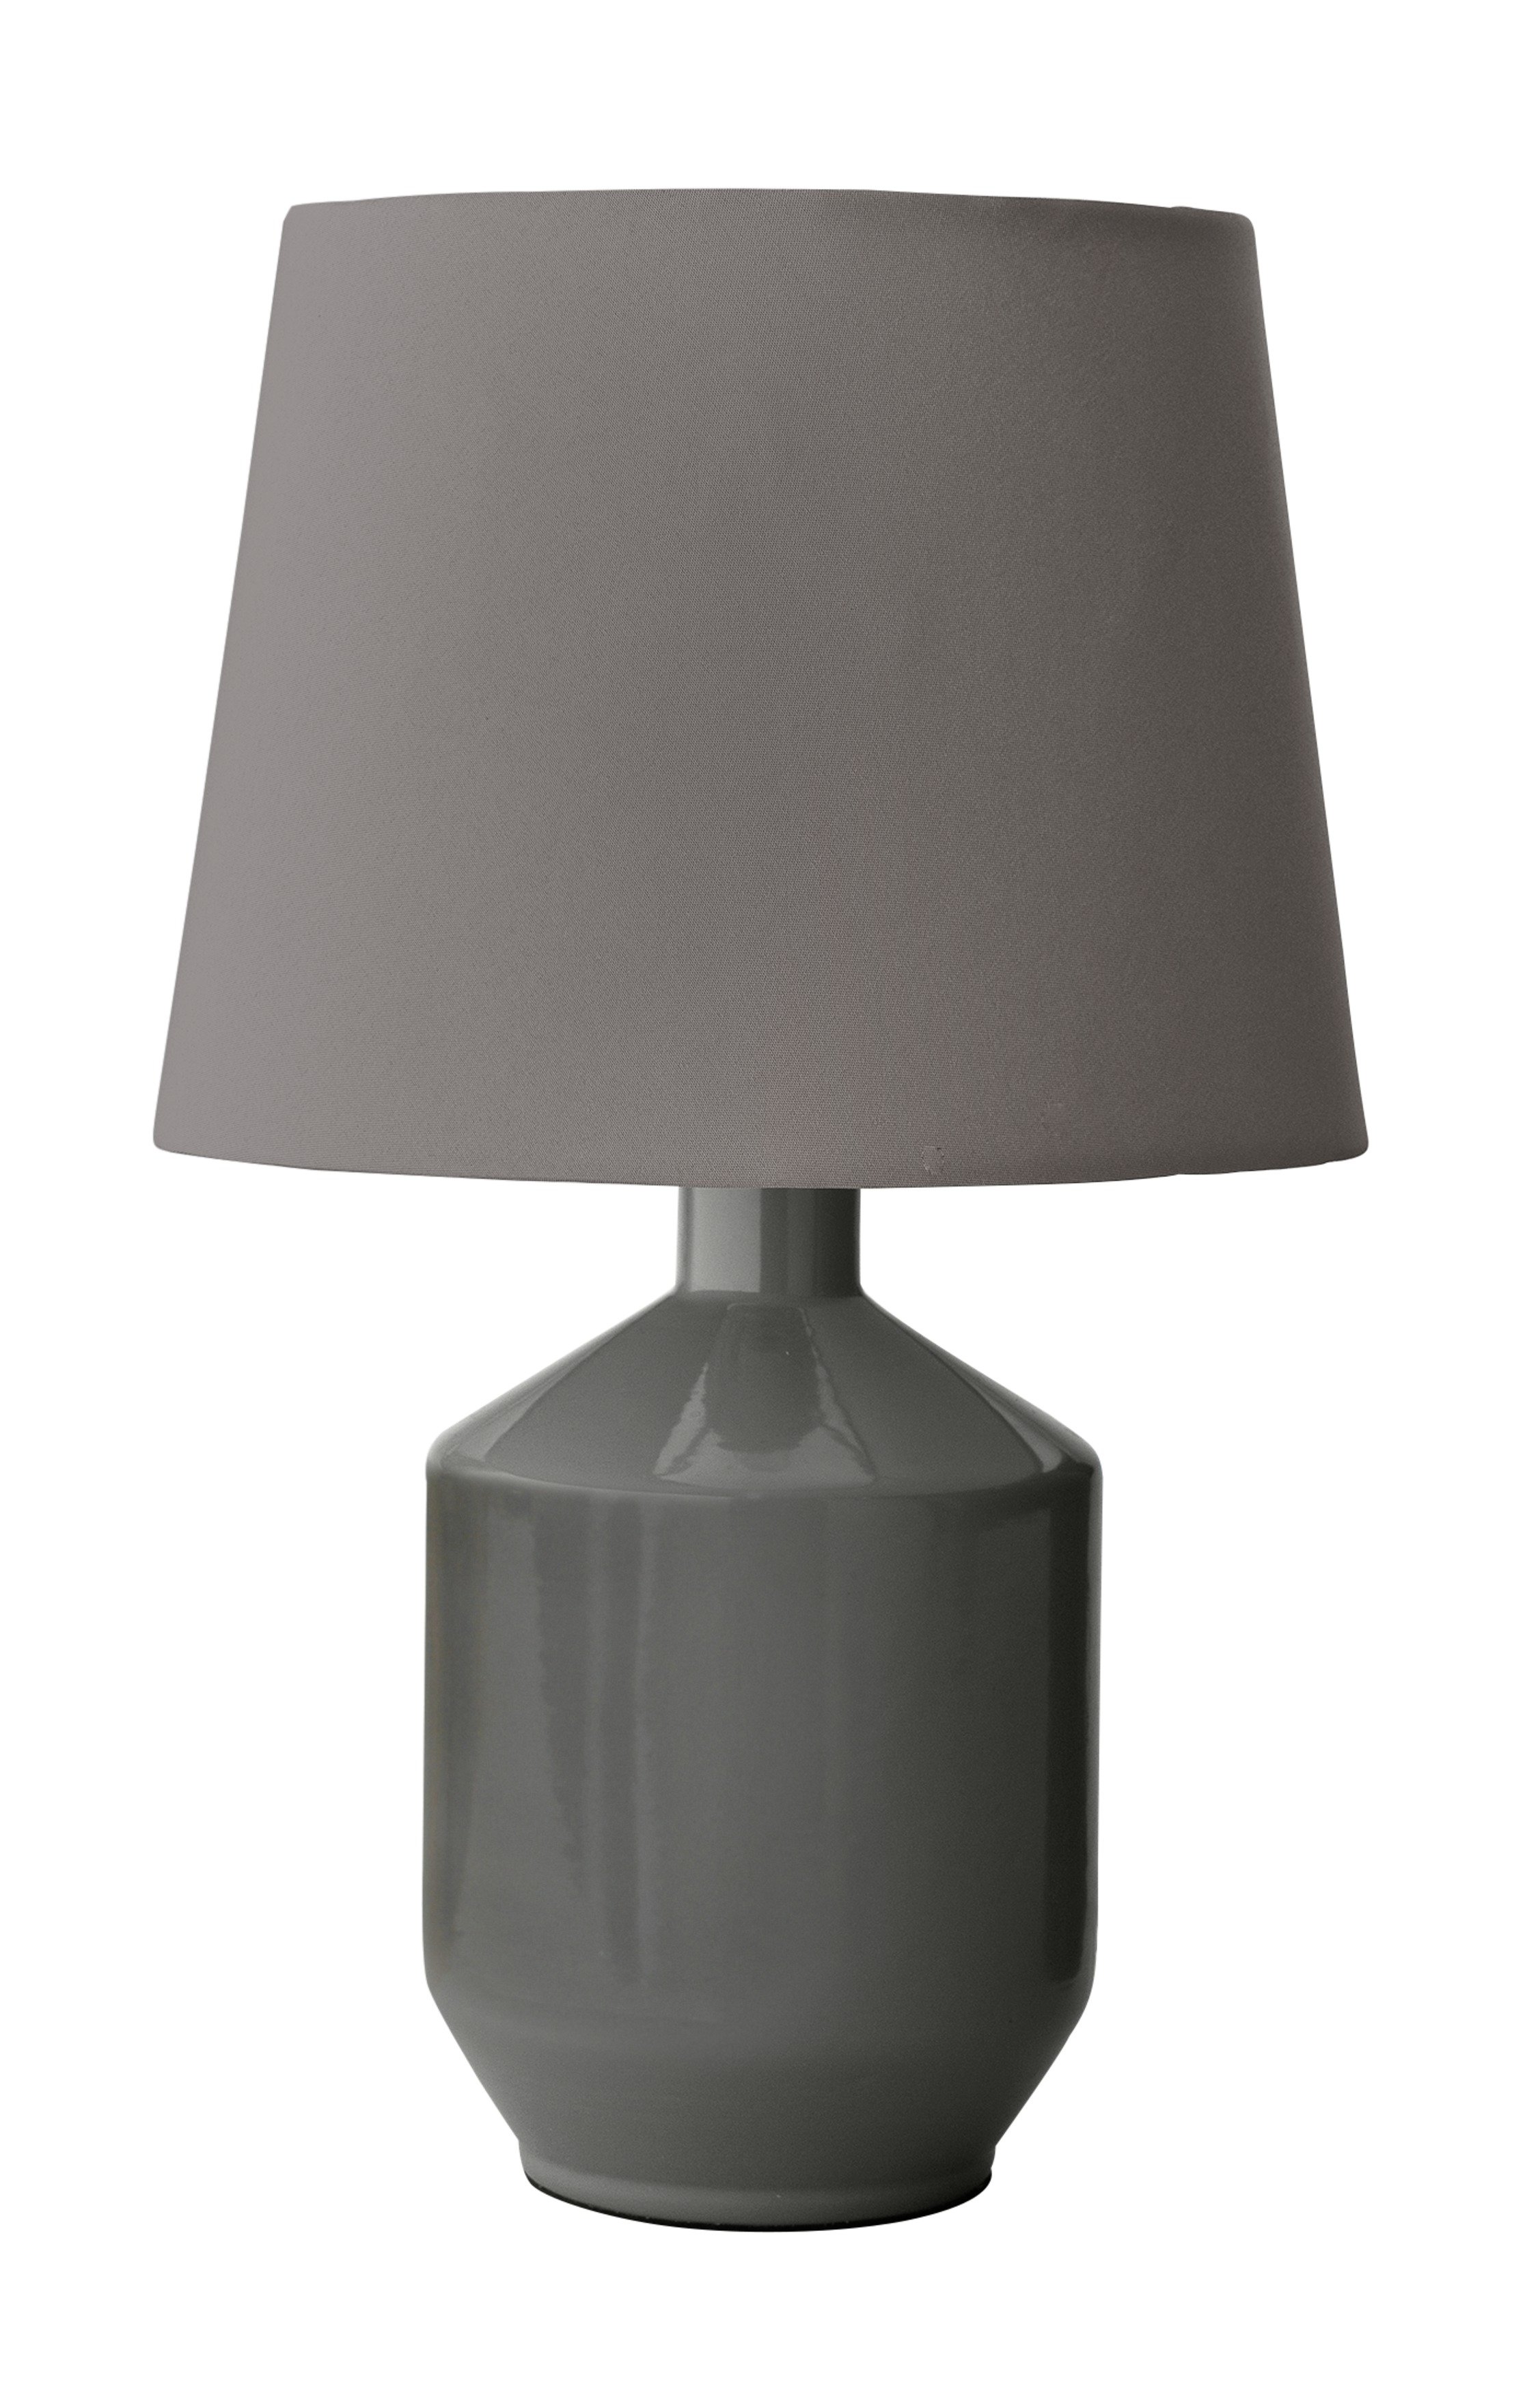 Argos Home Ceramic Table Lamp - Flint Grey